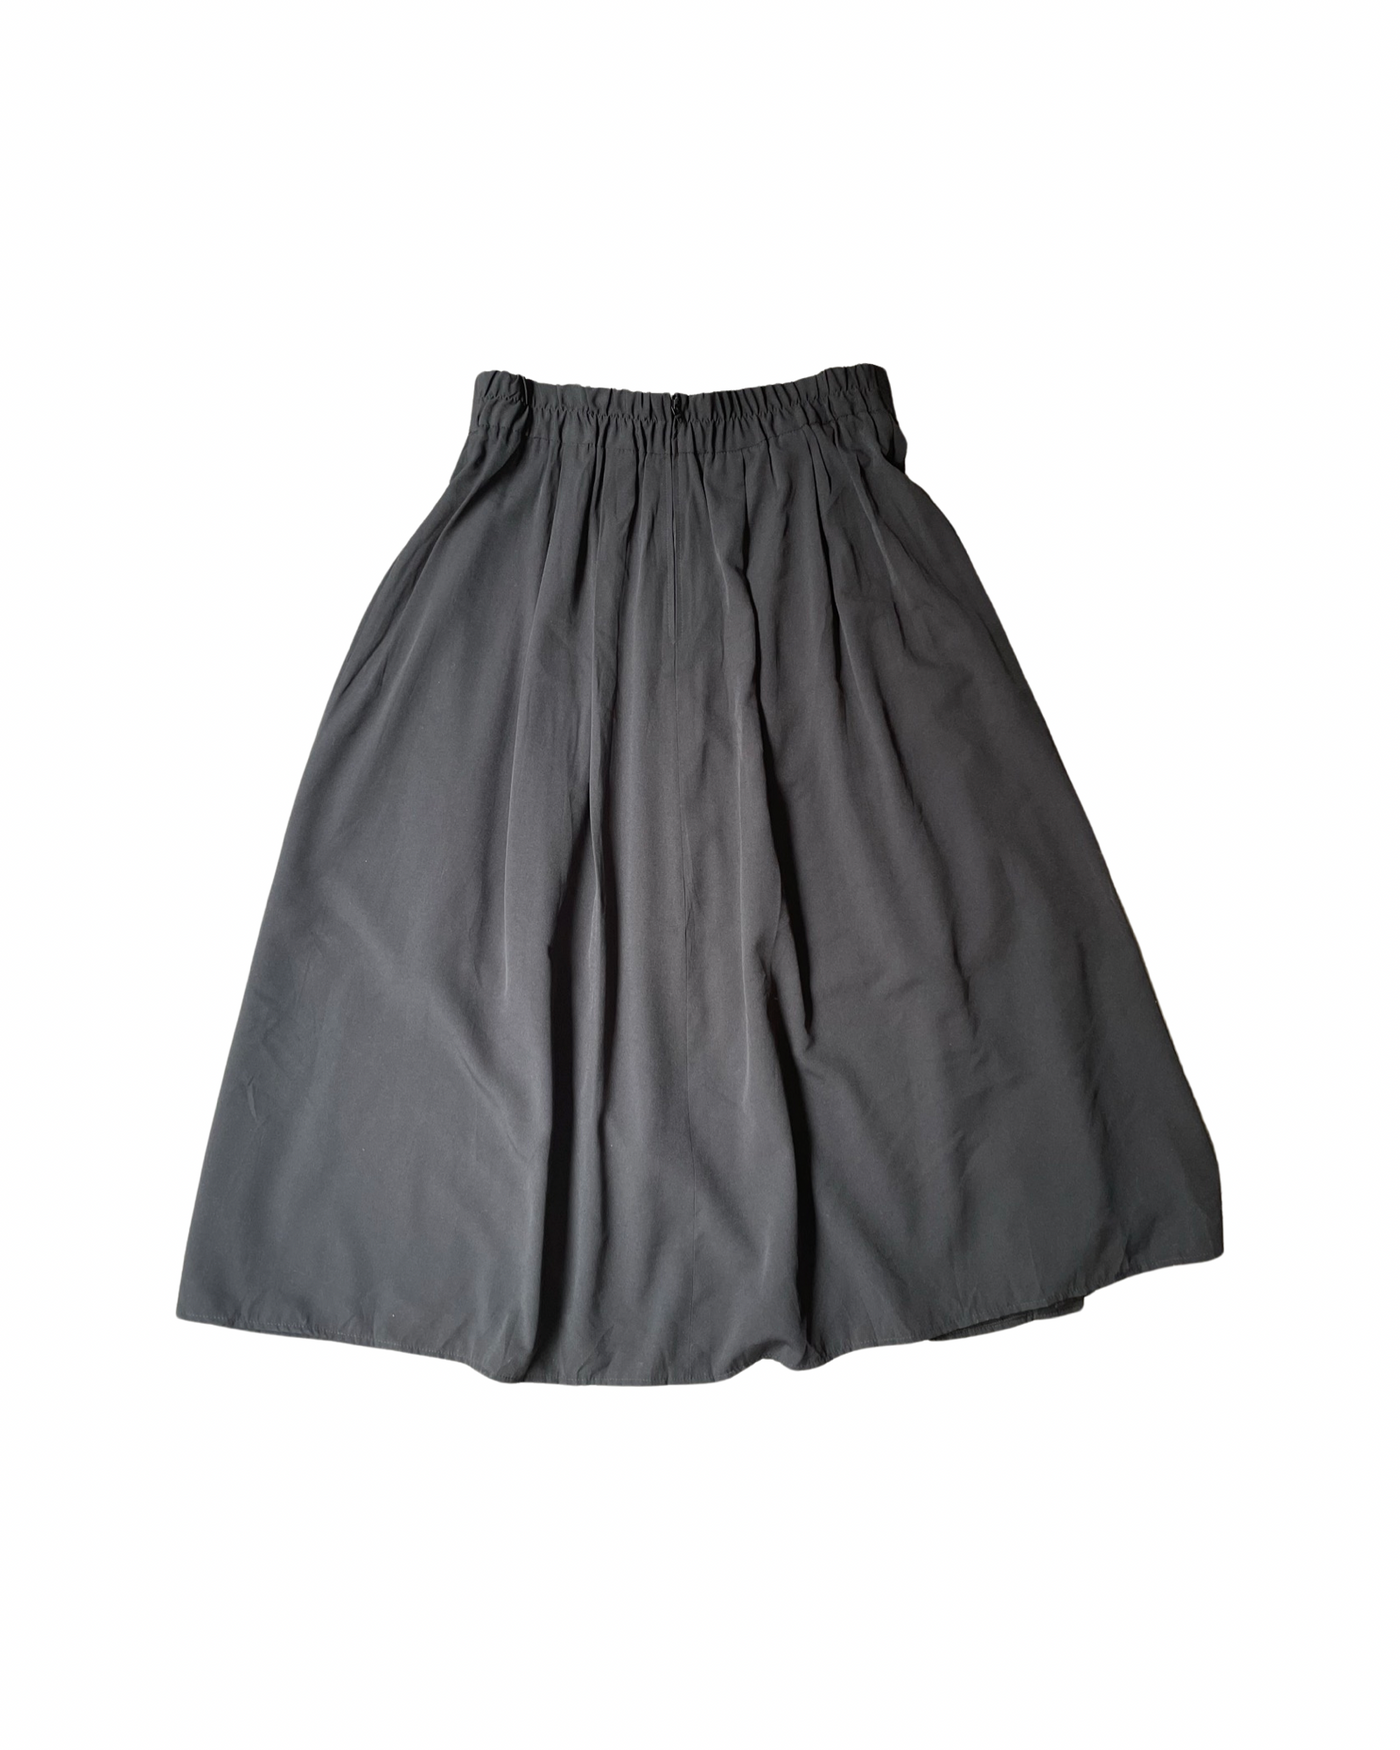 Vintage 90’s Summer Skirt